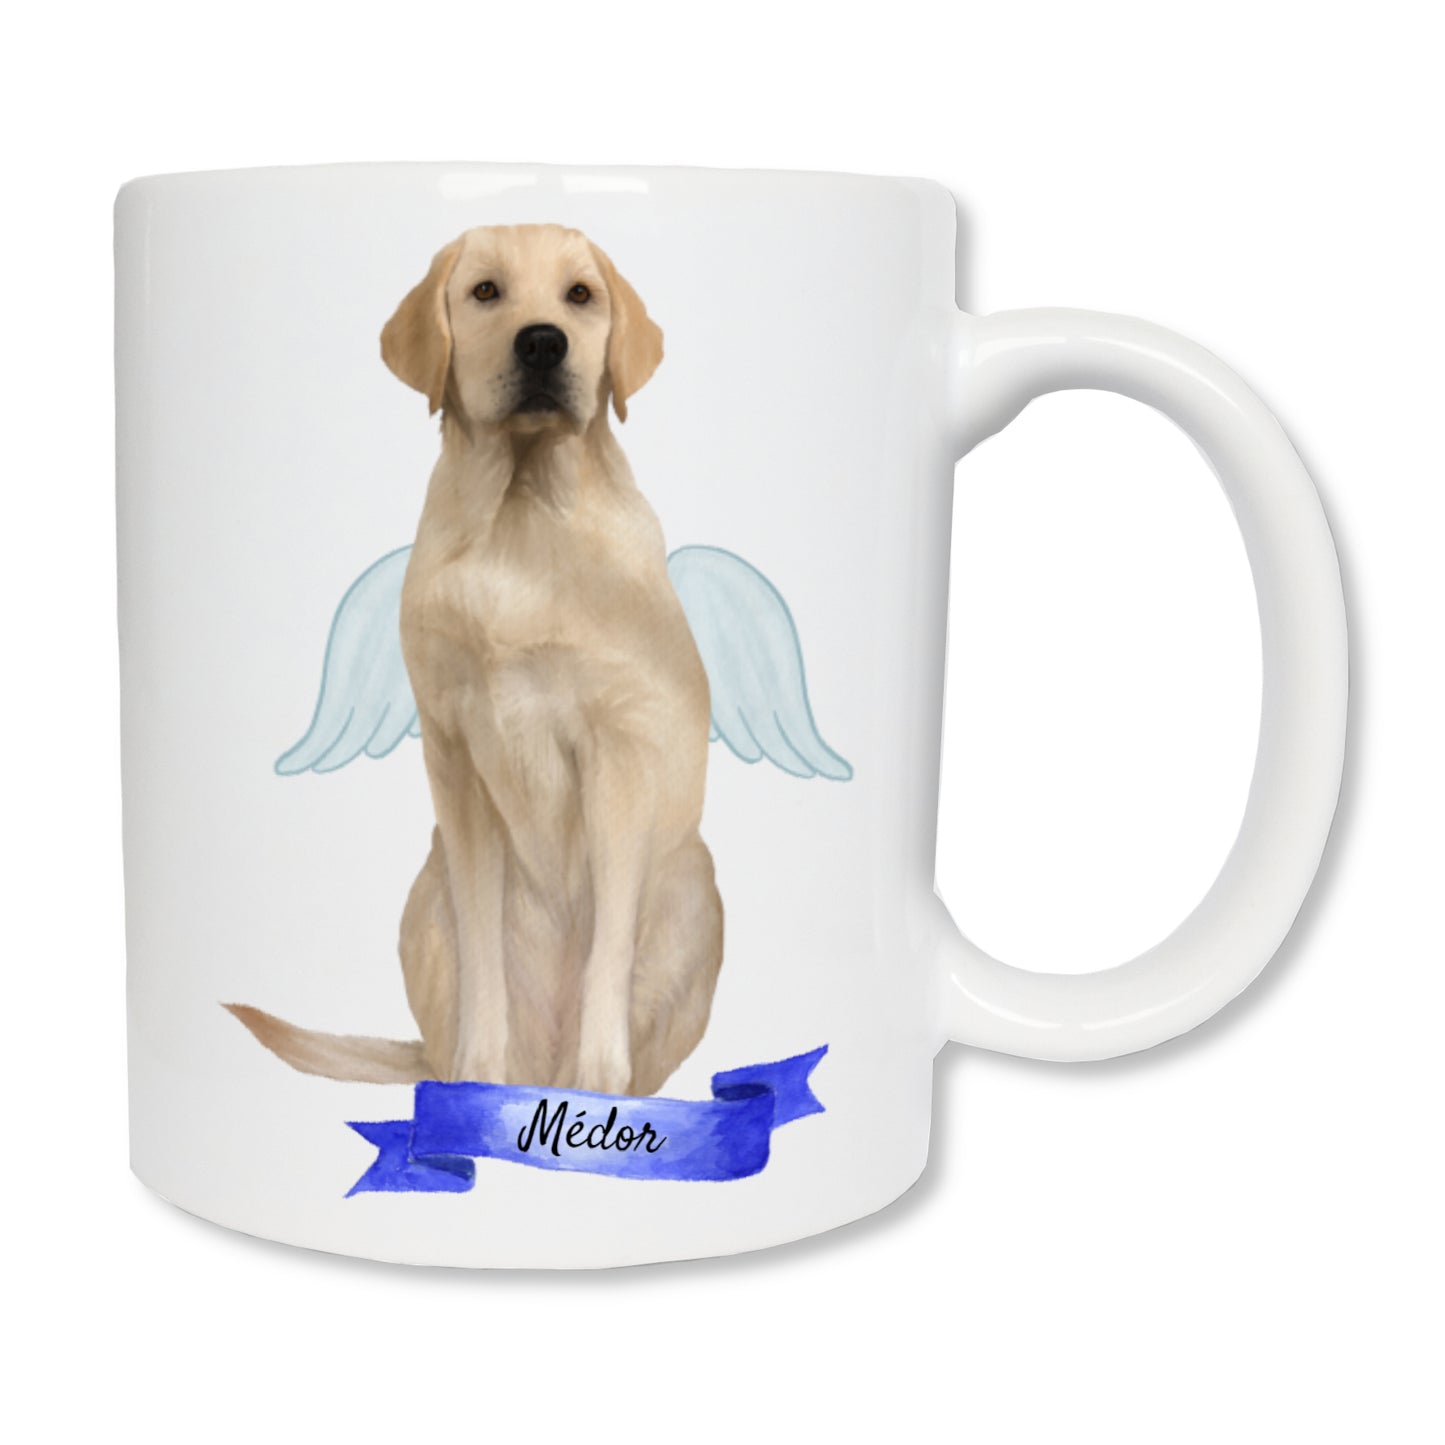 Personalized Labrador dog mug and his first name